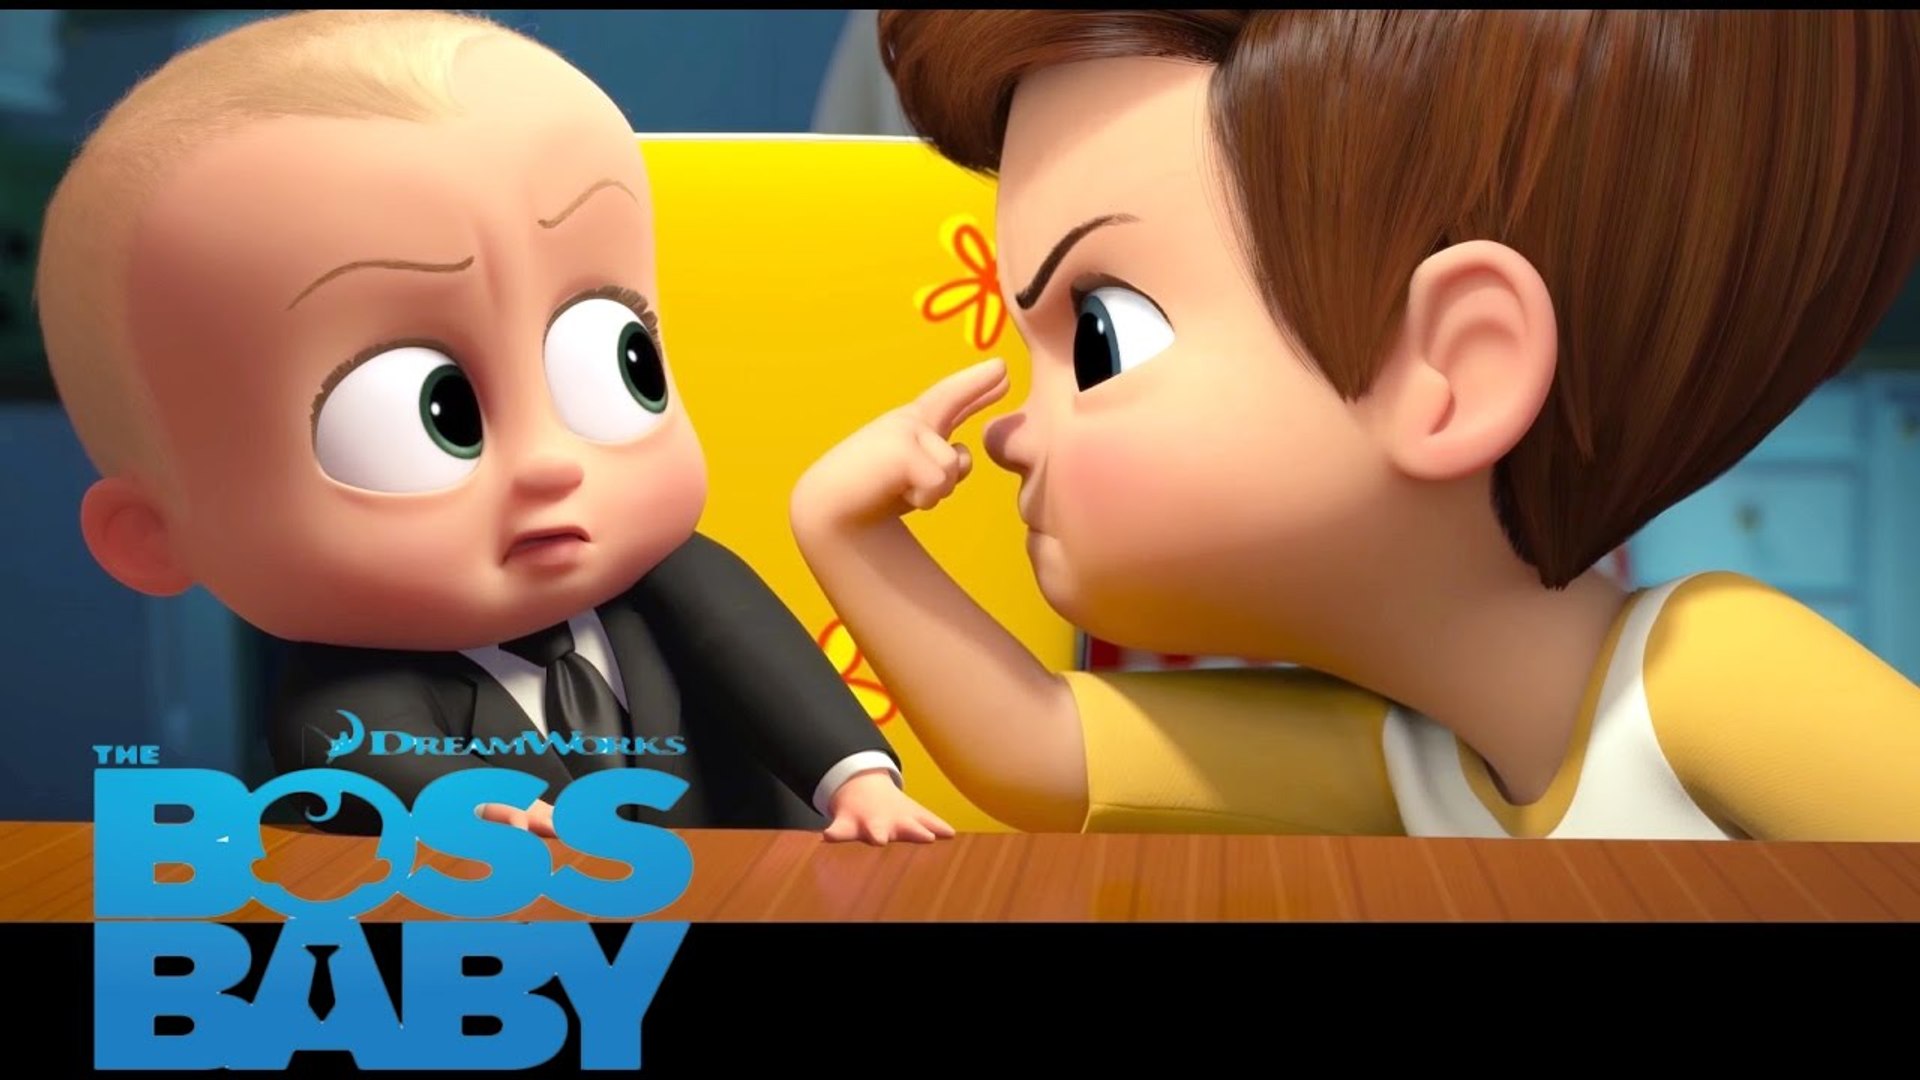 movie boss baby (2017) in hindi - video Dailymotion